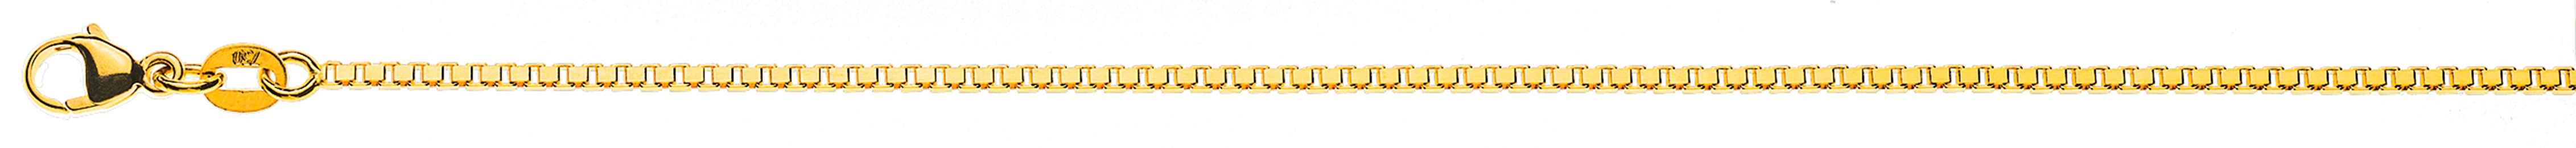 AURONOS Style Necklace yellow gold 9K Venetian chain diamond cut 40cm 1.4mm